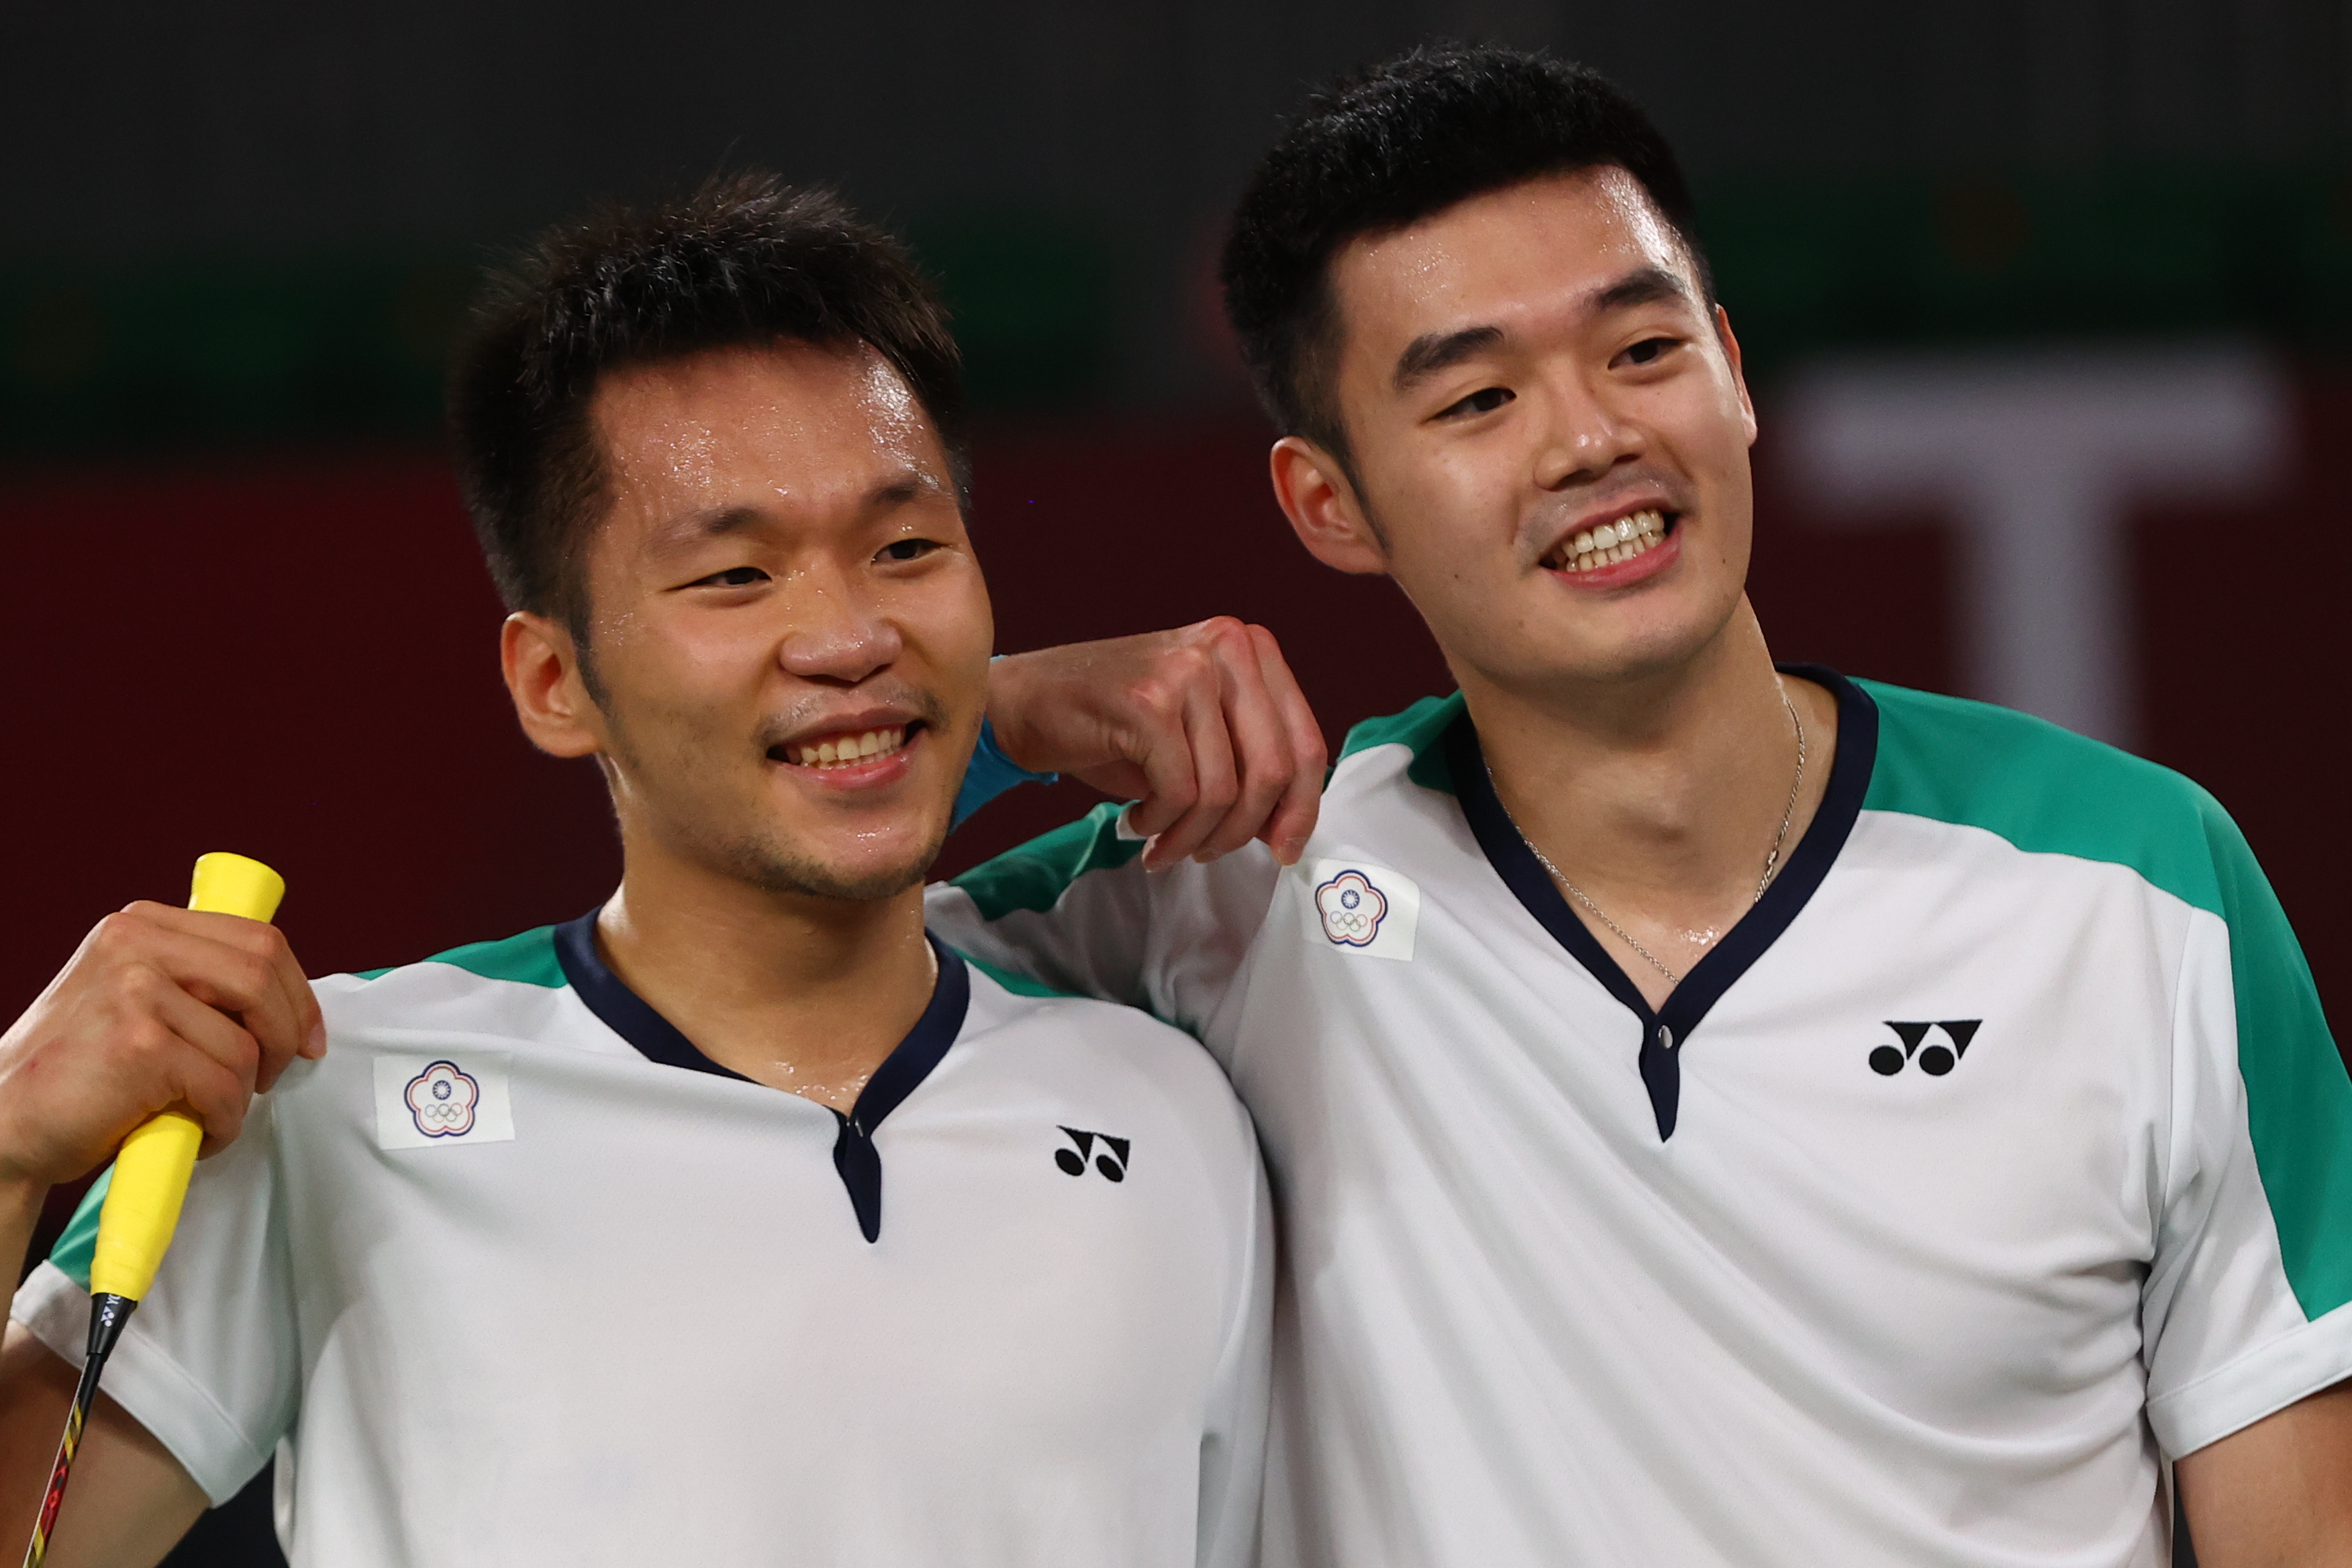 Men double badminton tokyo